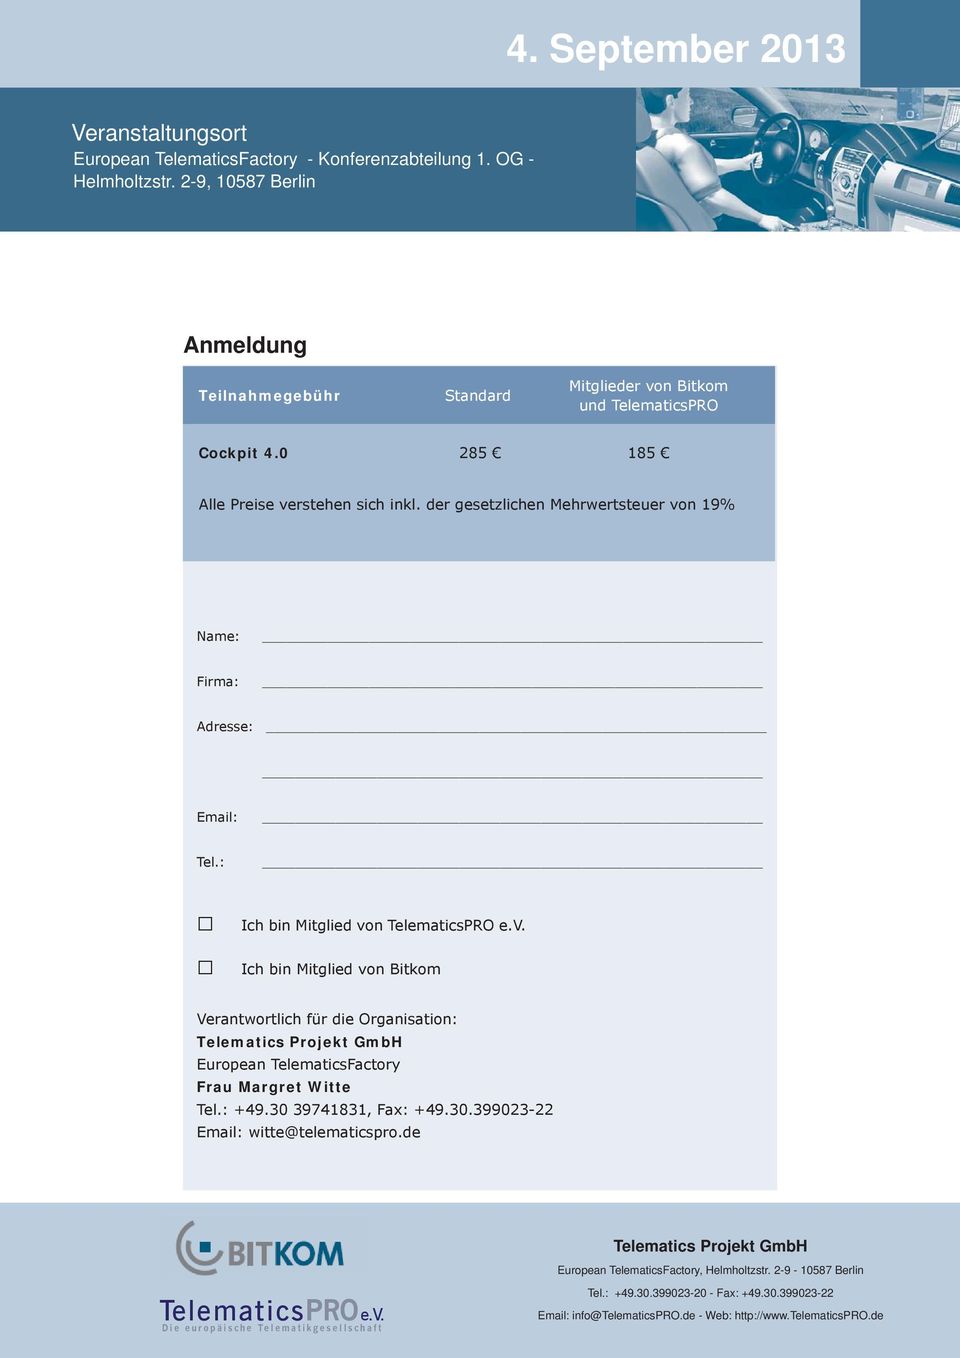 : +49.30 39741831, Fax: +49.30.399023-22 Email: witte@telematicspro.de Telematics Projekt GmbH European TelematicsFactory, Helmholtzstr. 2-9 - 10587 Berlin TelematicsPROe.V.